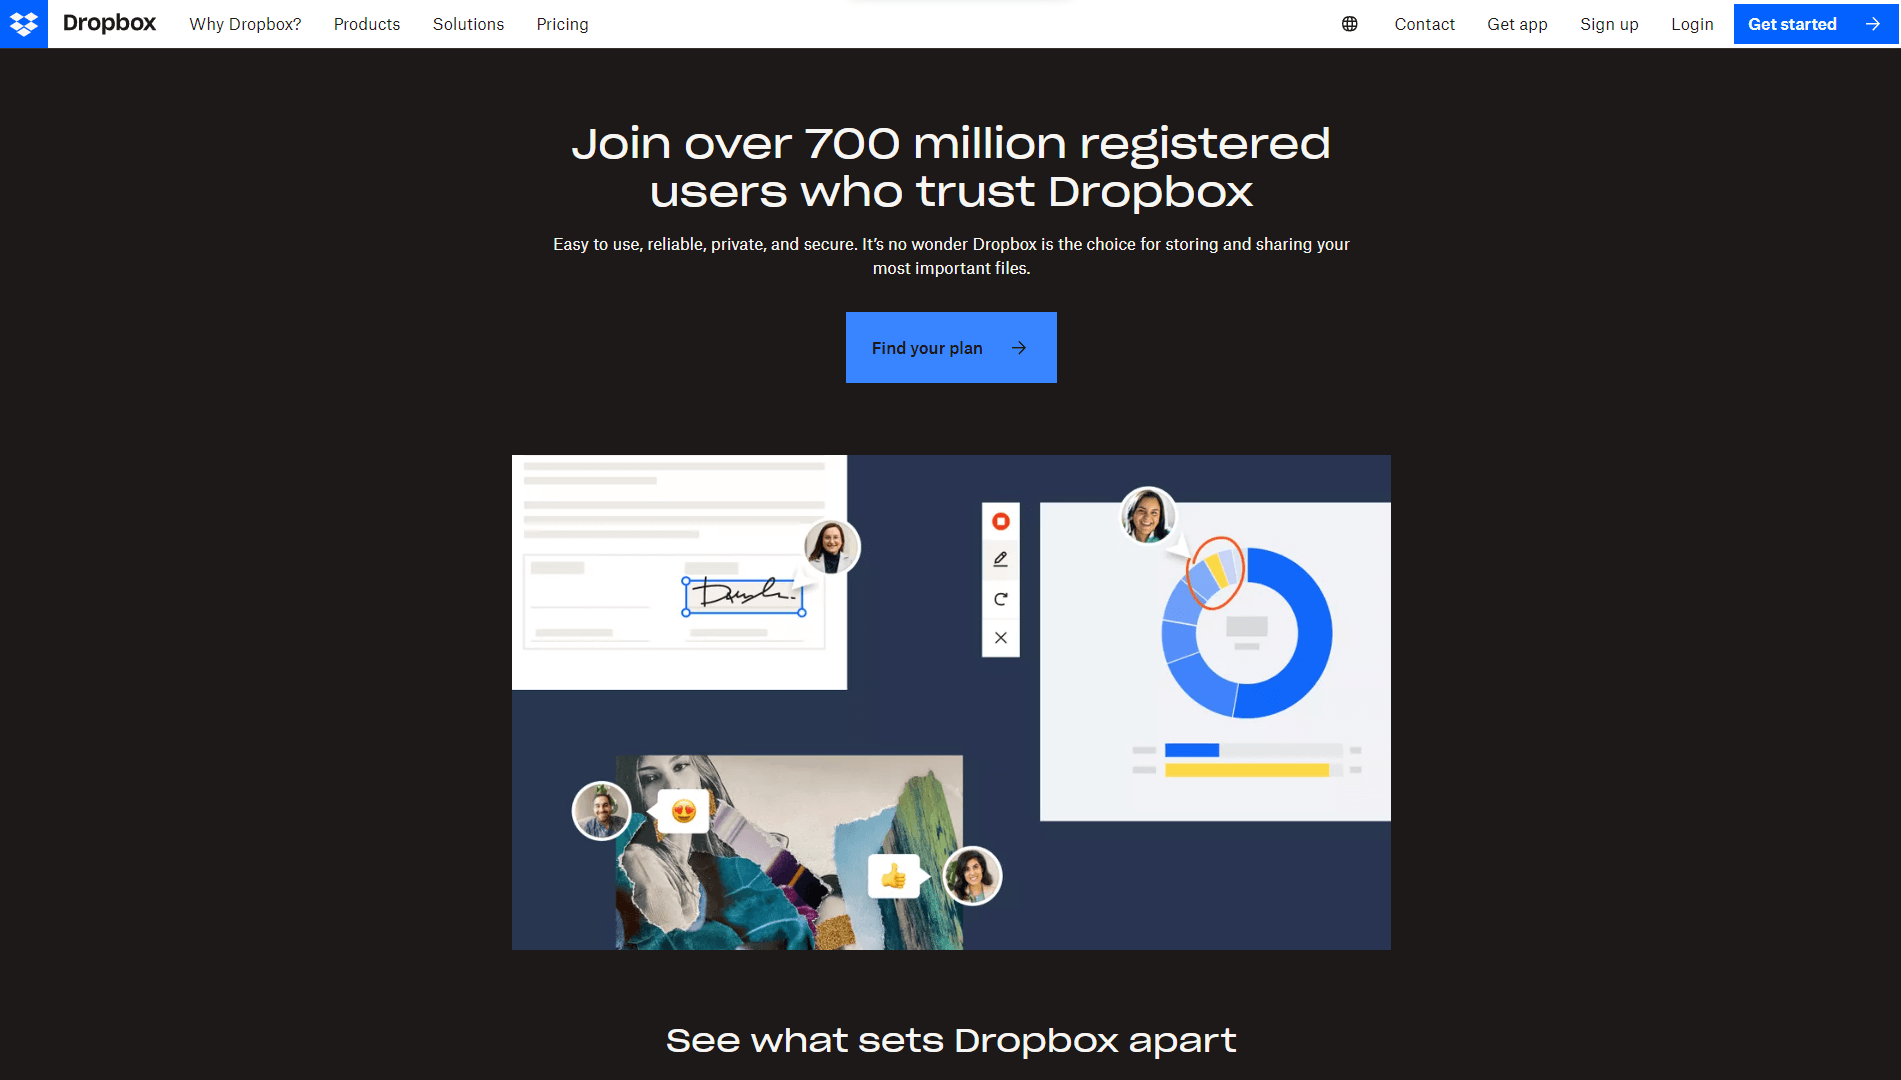 Dropbox website's homepage.